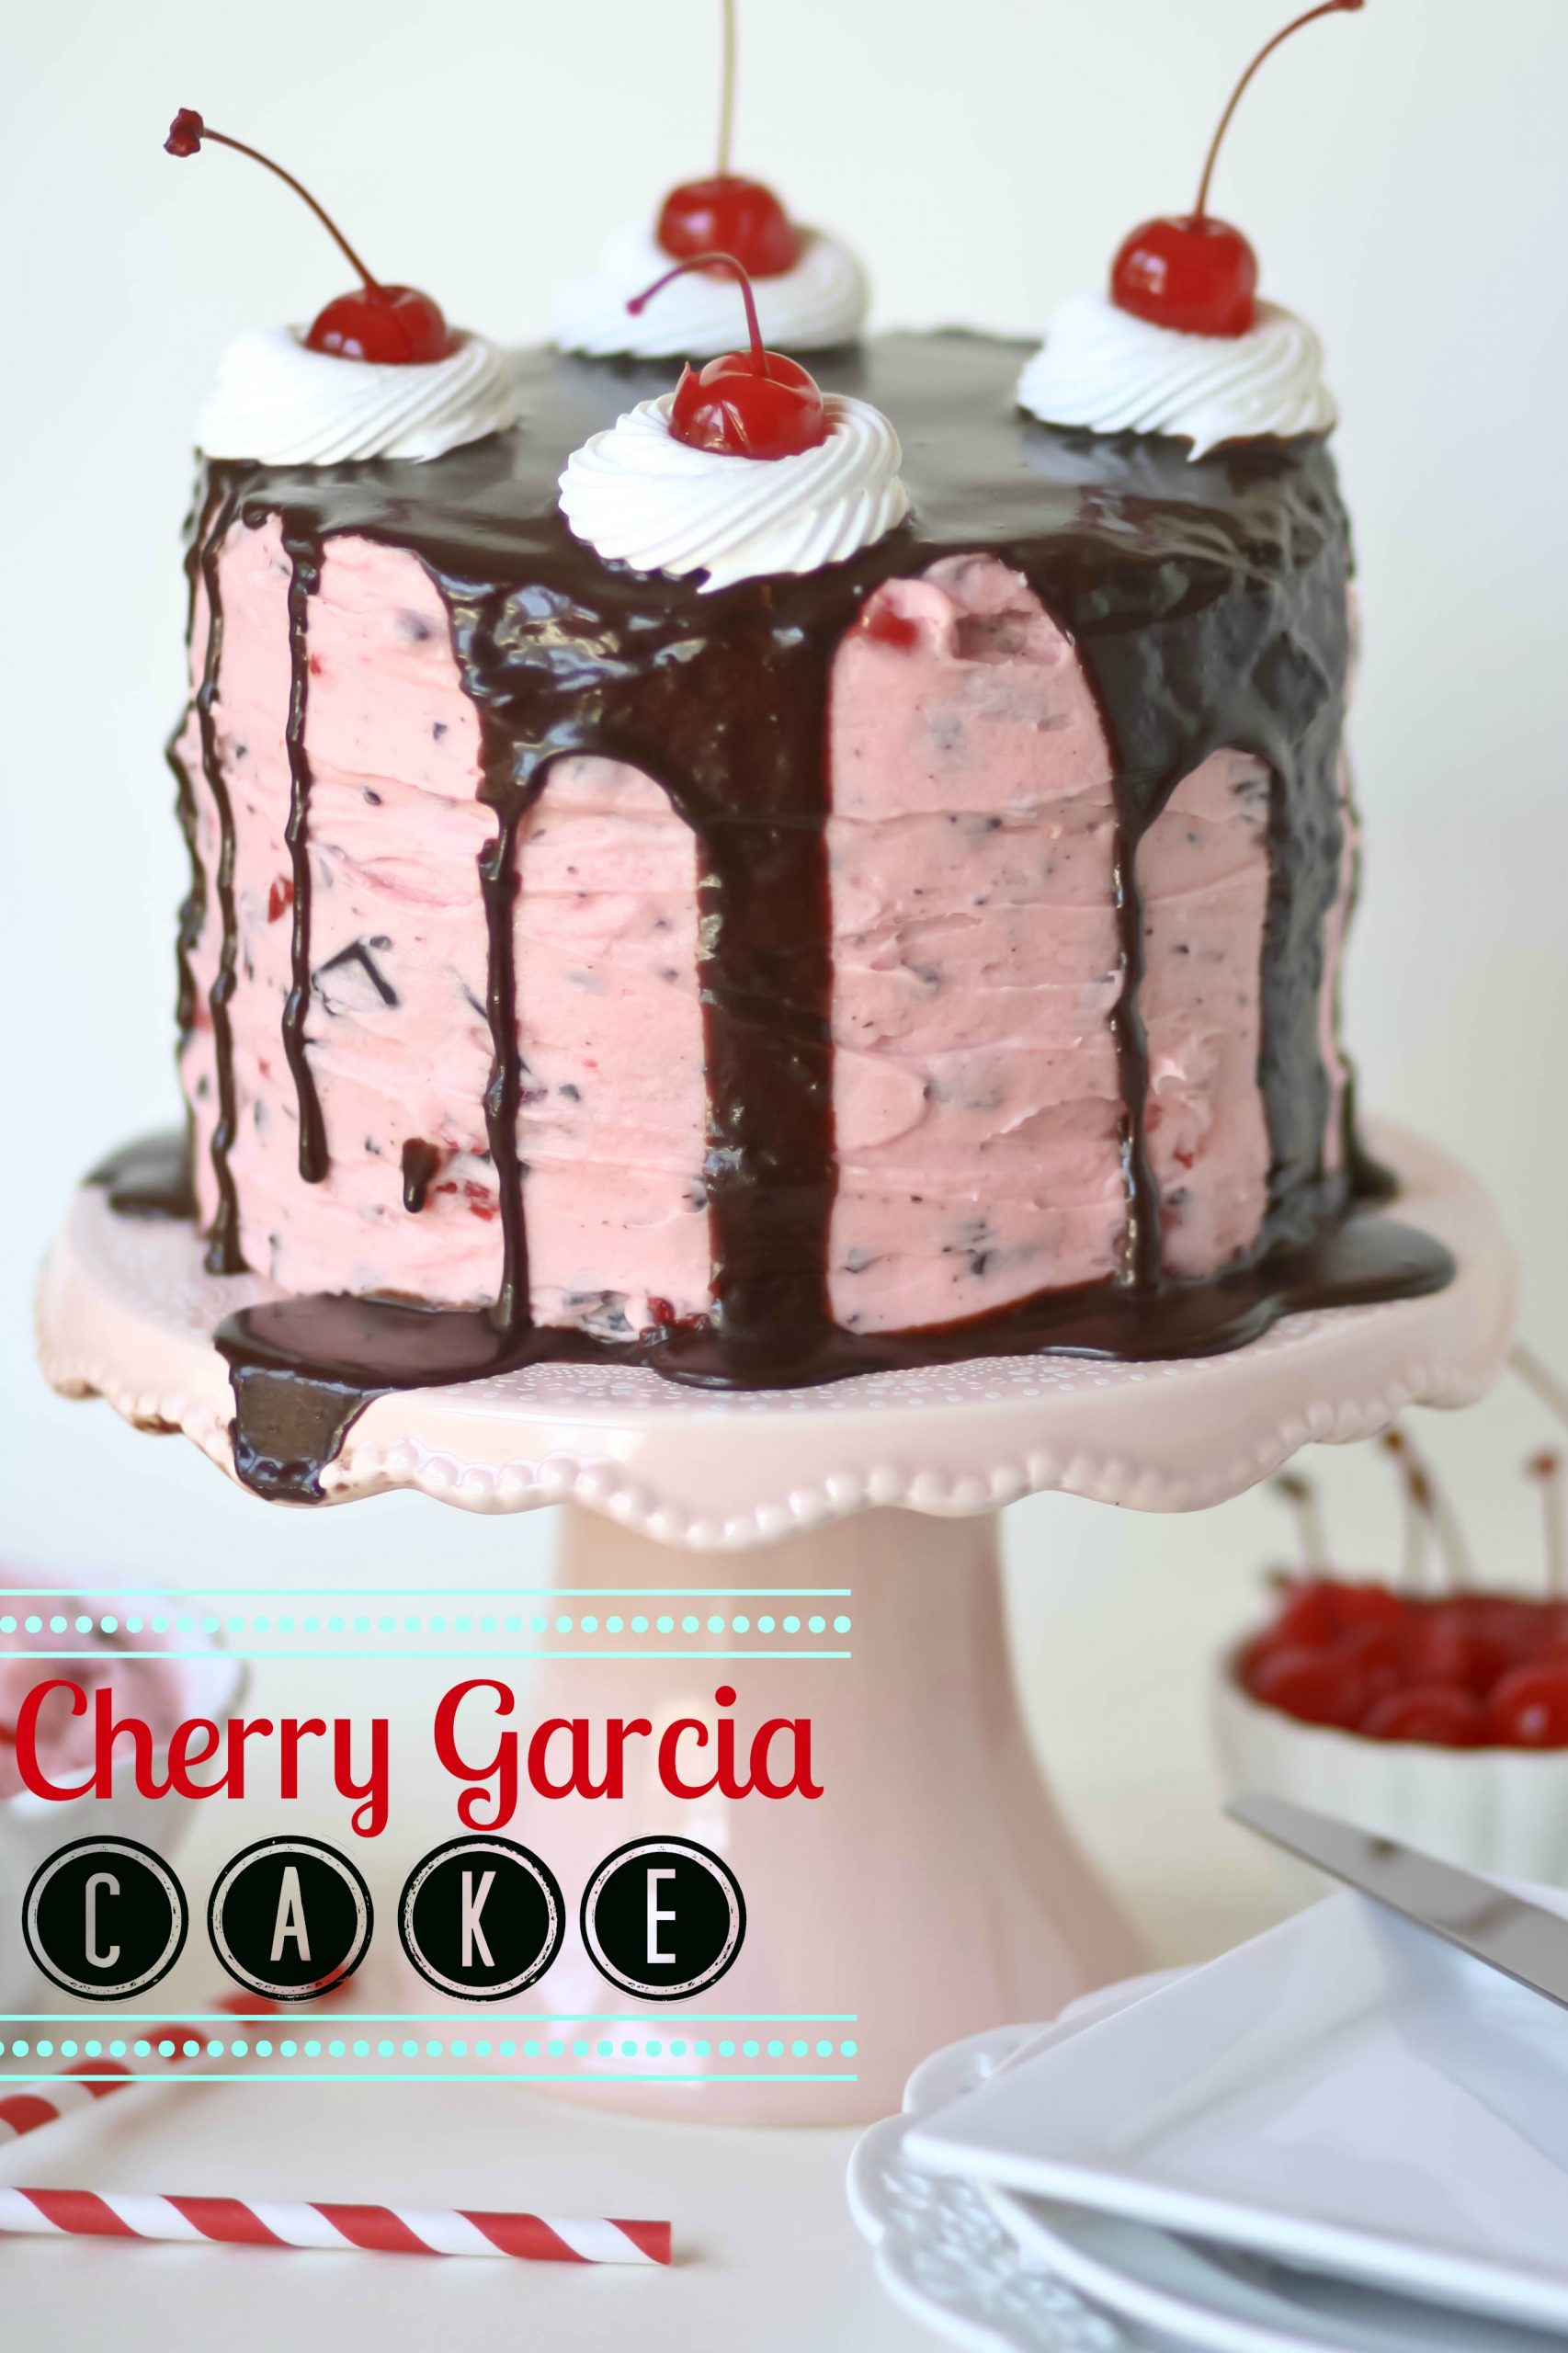 Cherry Garcia Cake (Ben &  Jerry